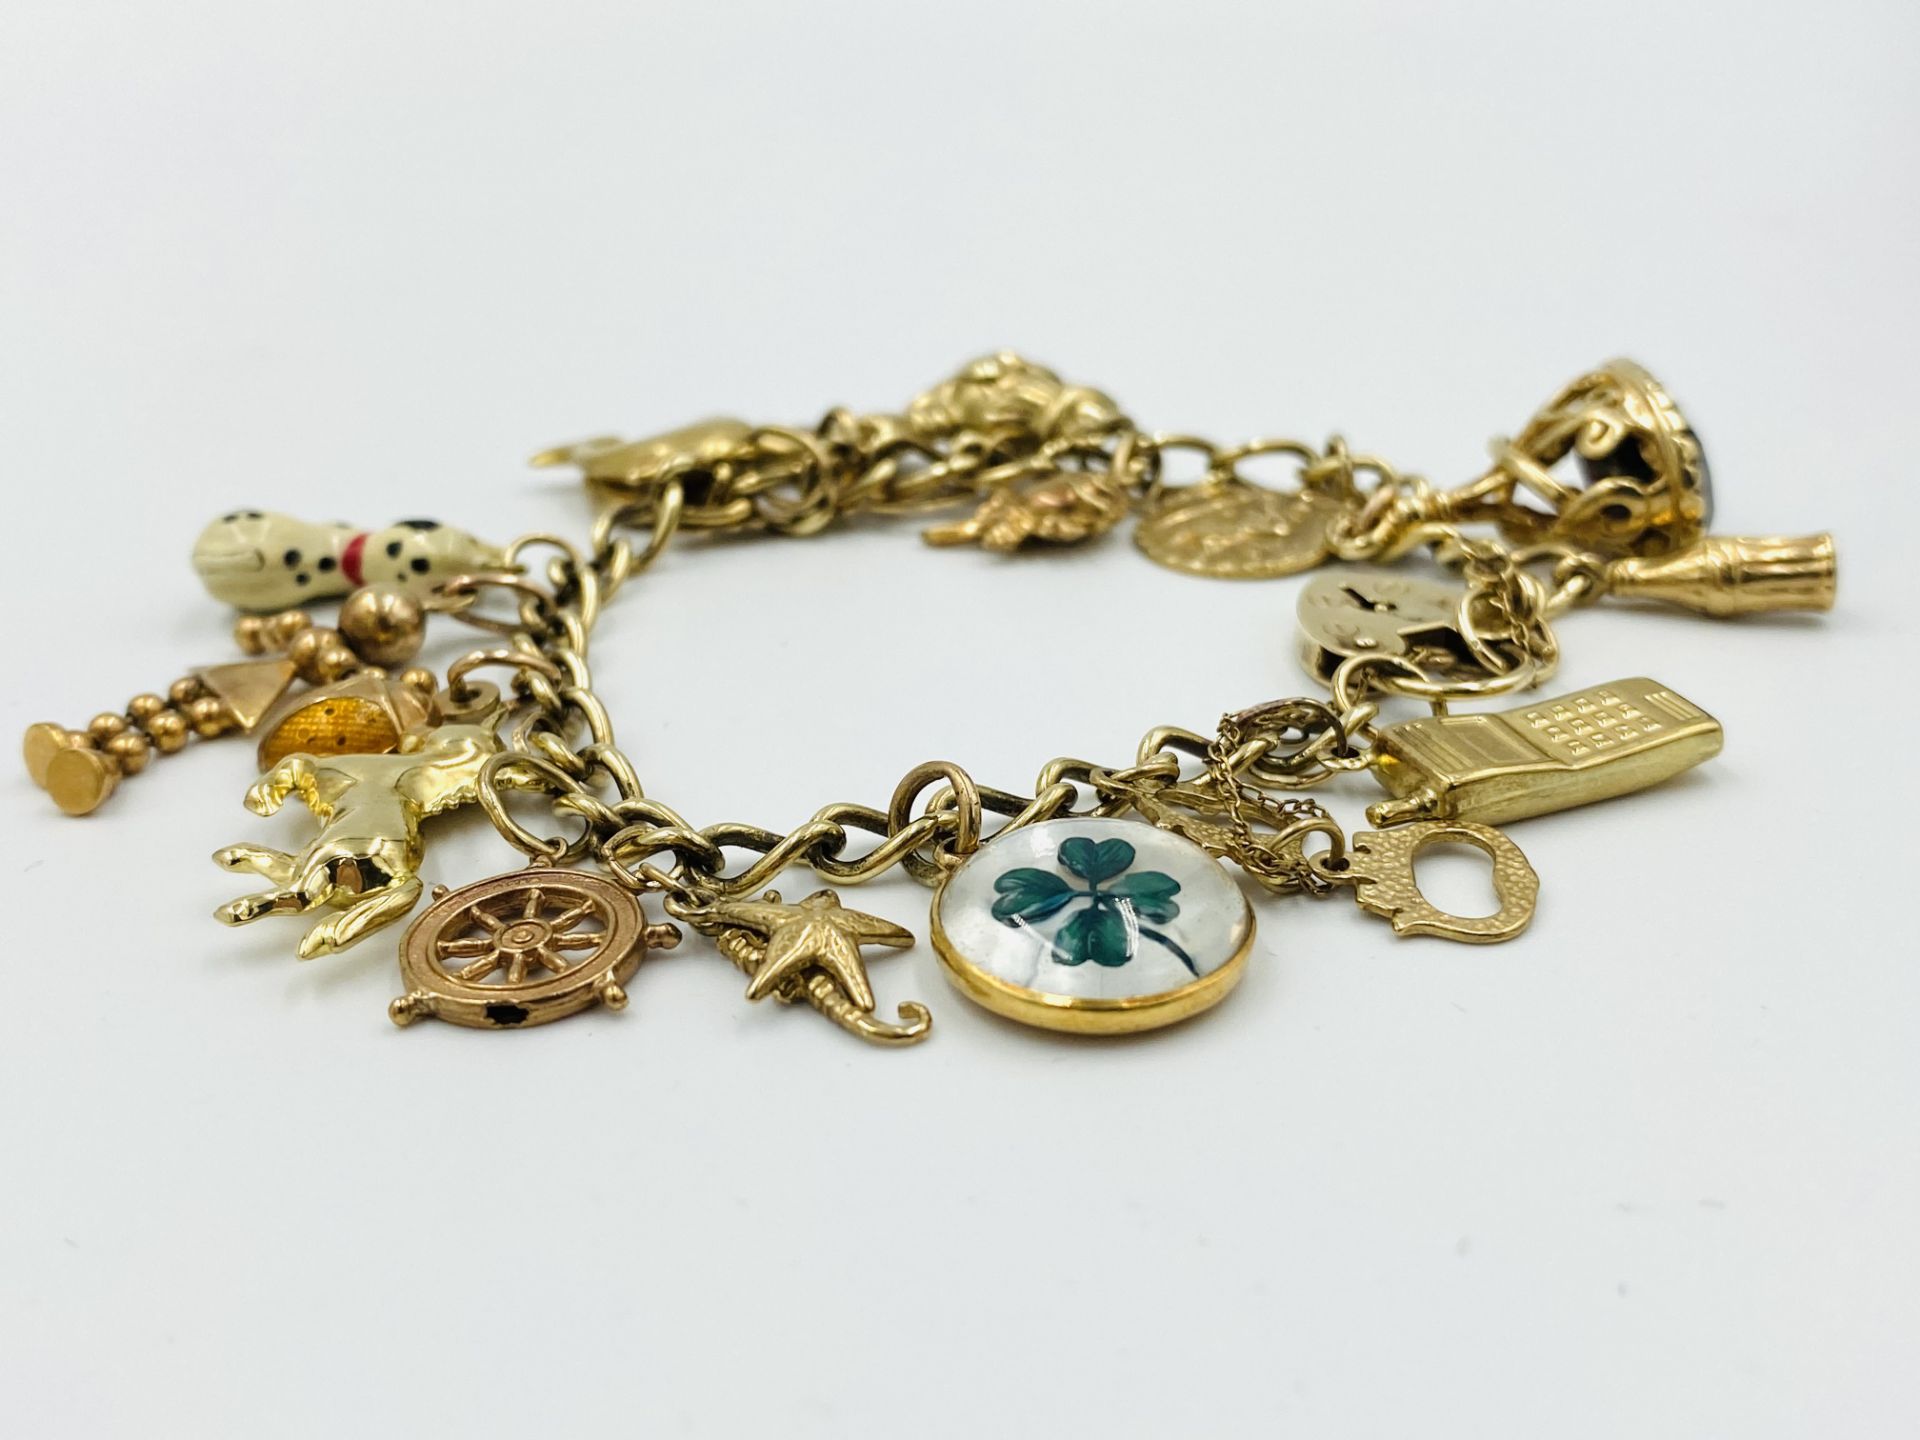 9ct gold charm bracelet - Image 3 of 5